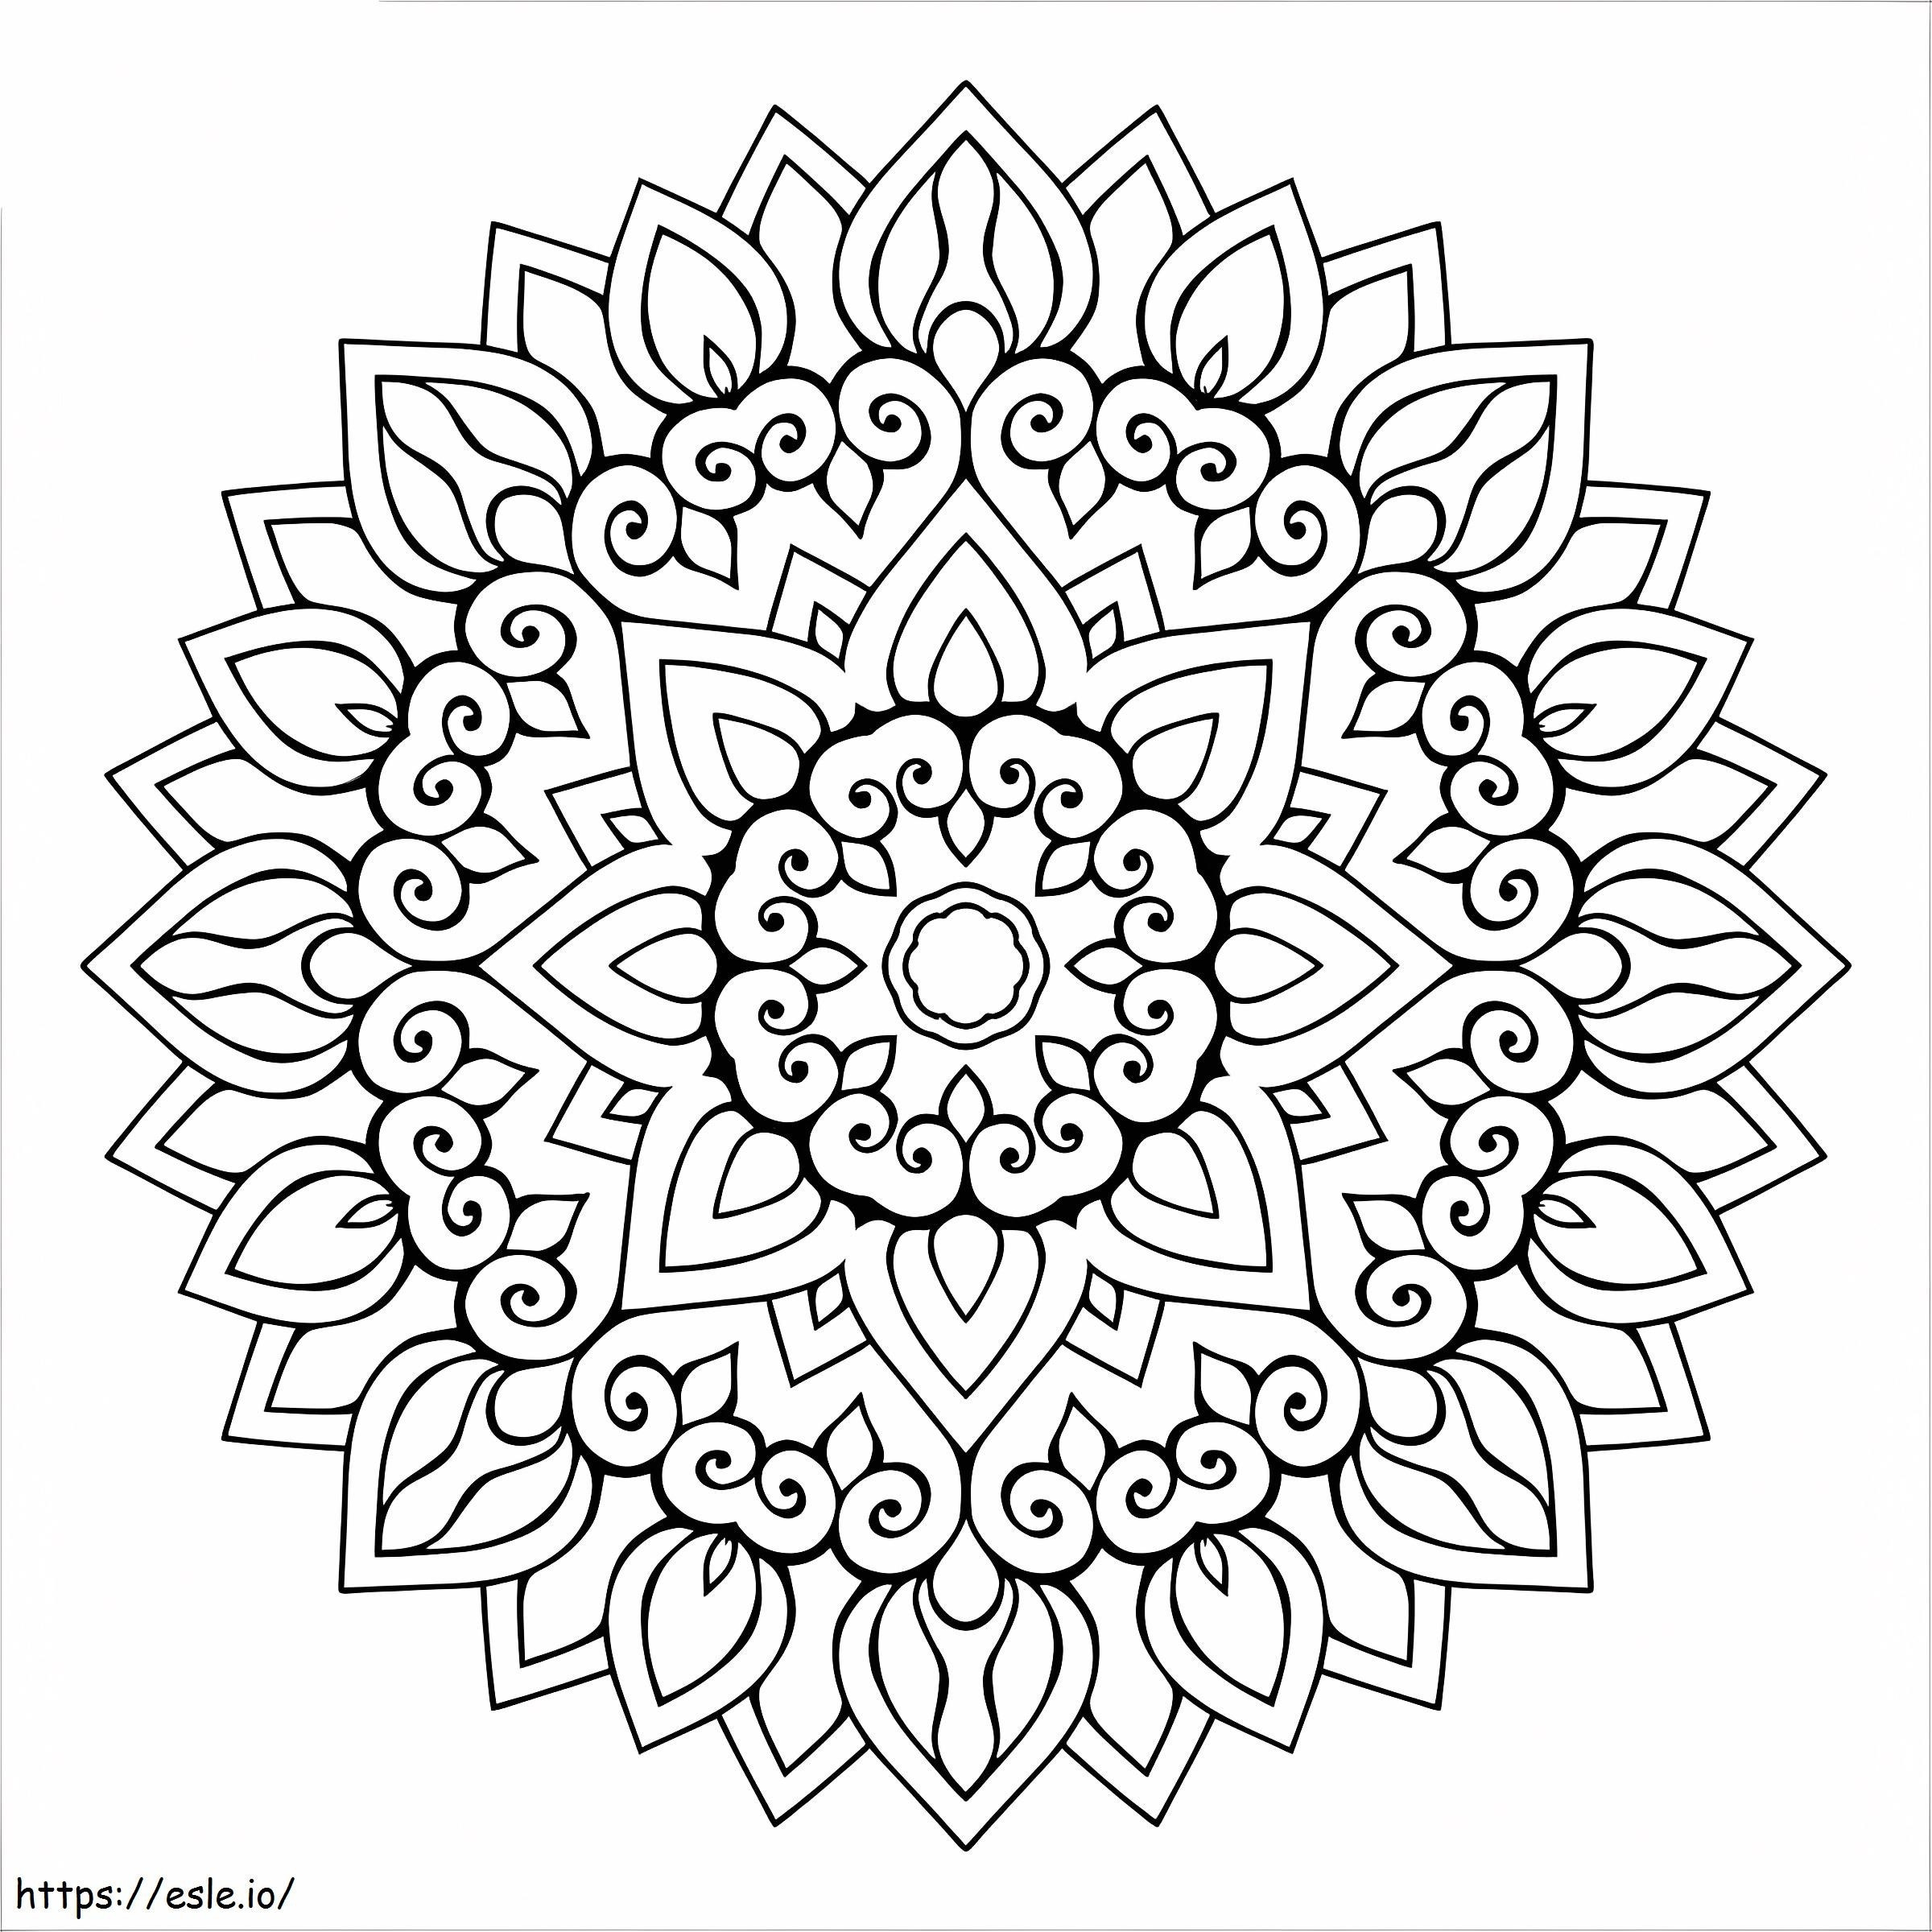 Mandala-Blume ausmalbilder